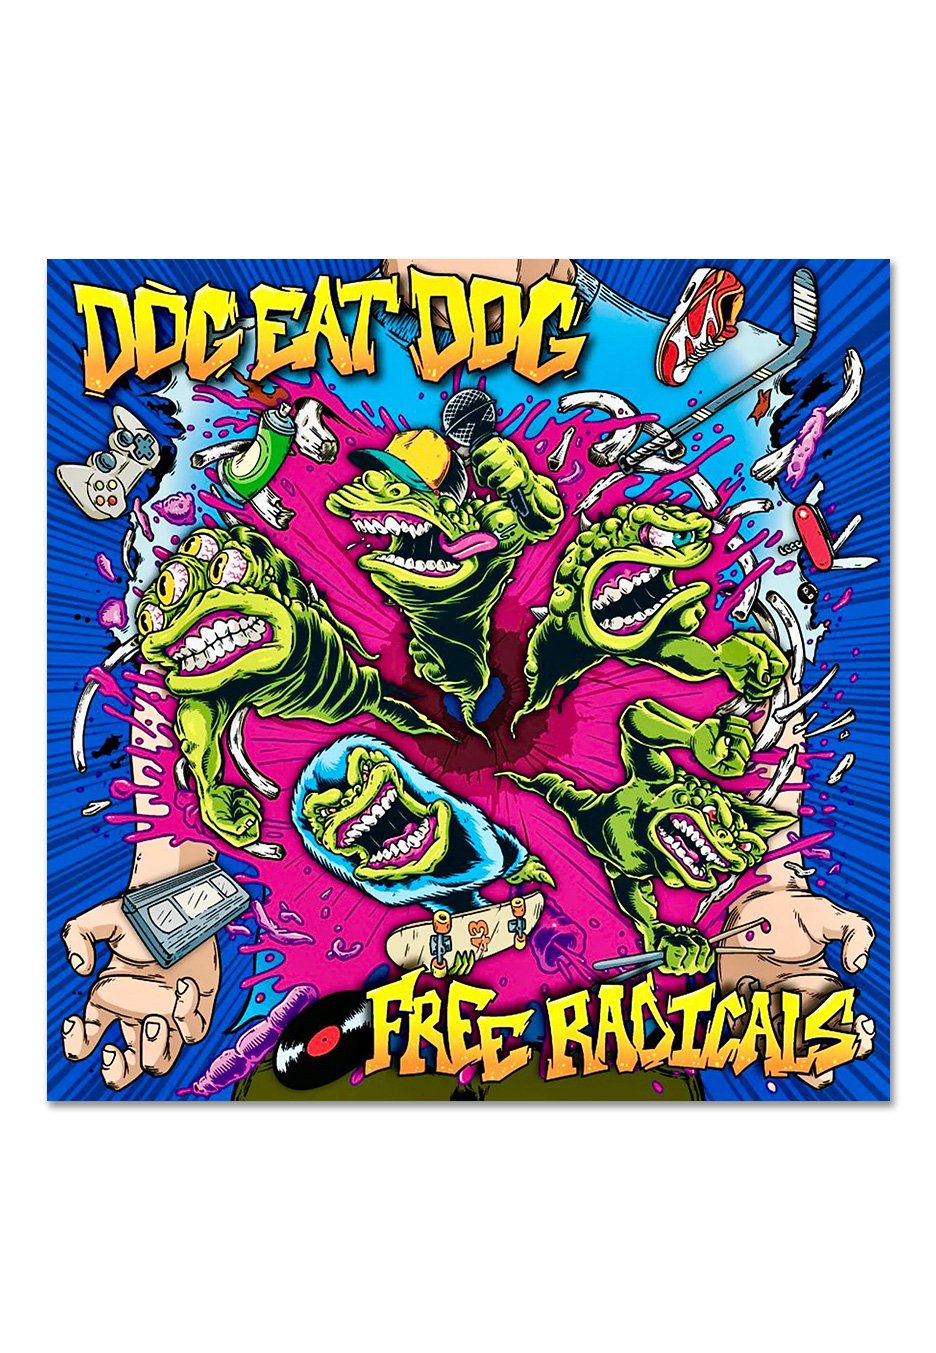 Dog Eat Dog - Free Radicals Ltd. Blue w/ Pink/Yellow/Green - Splattered Vinyl